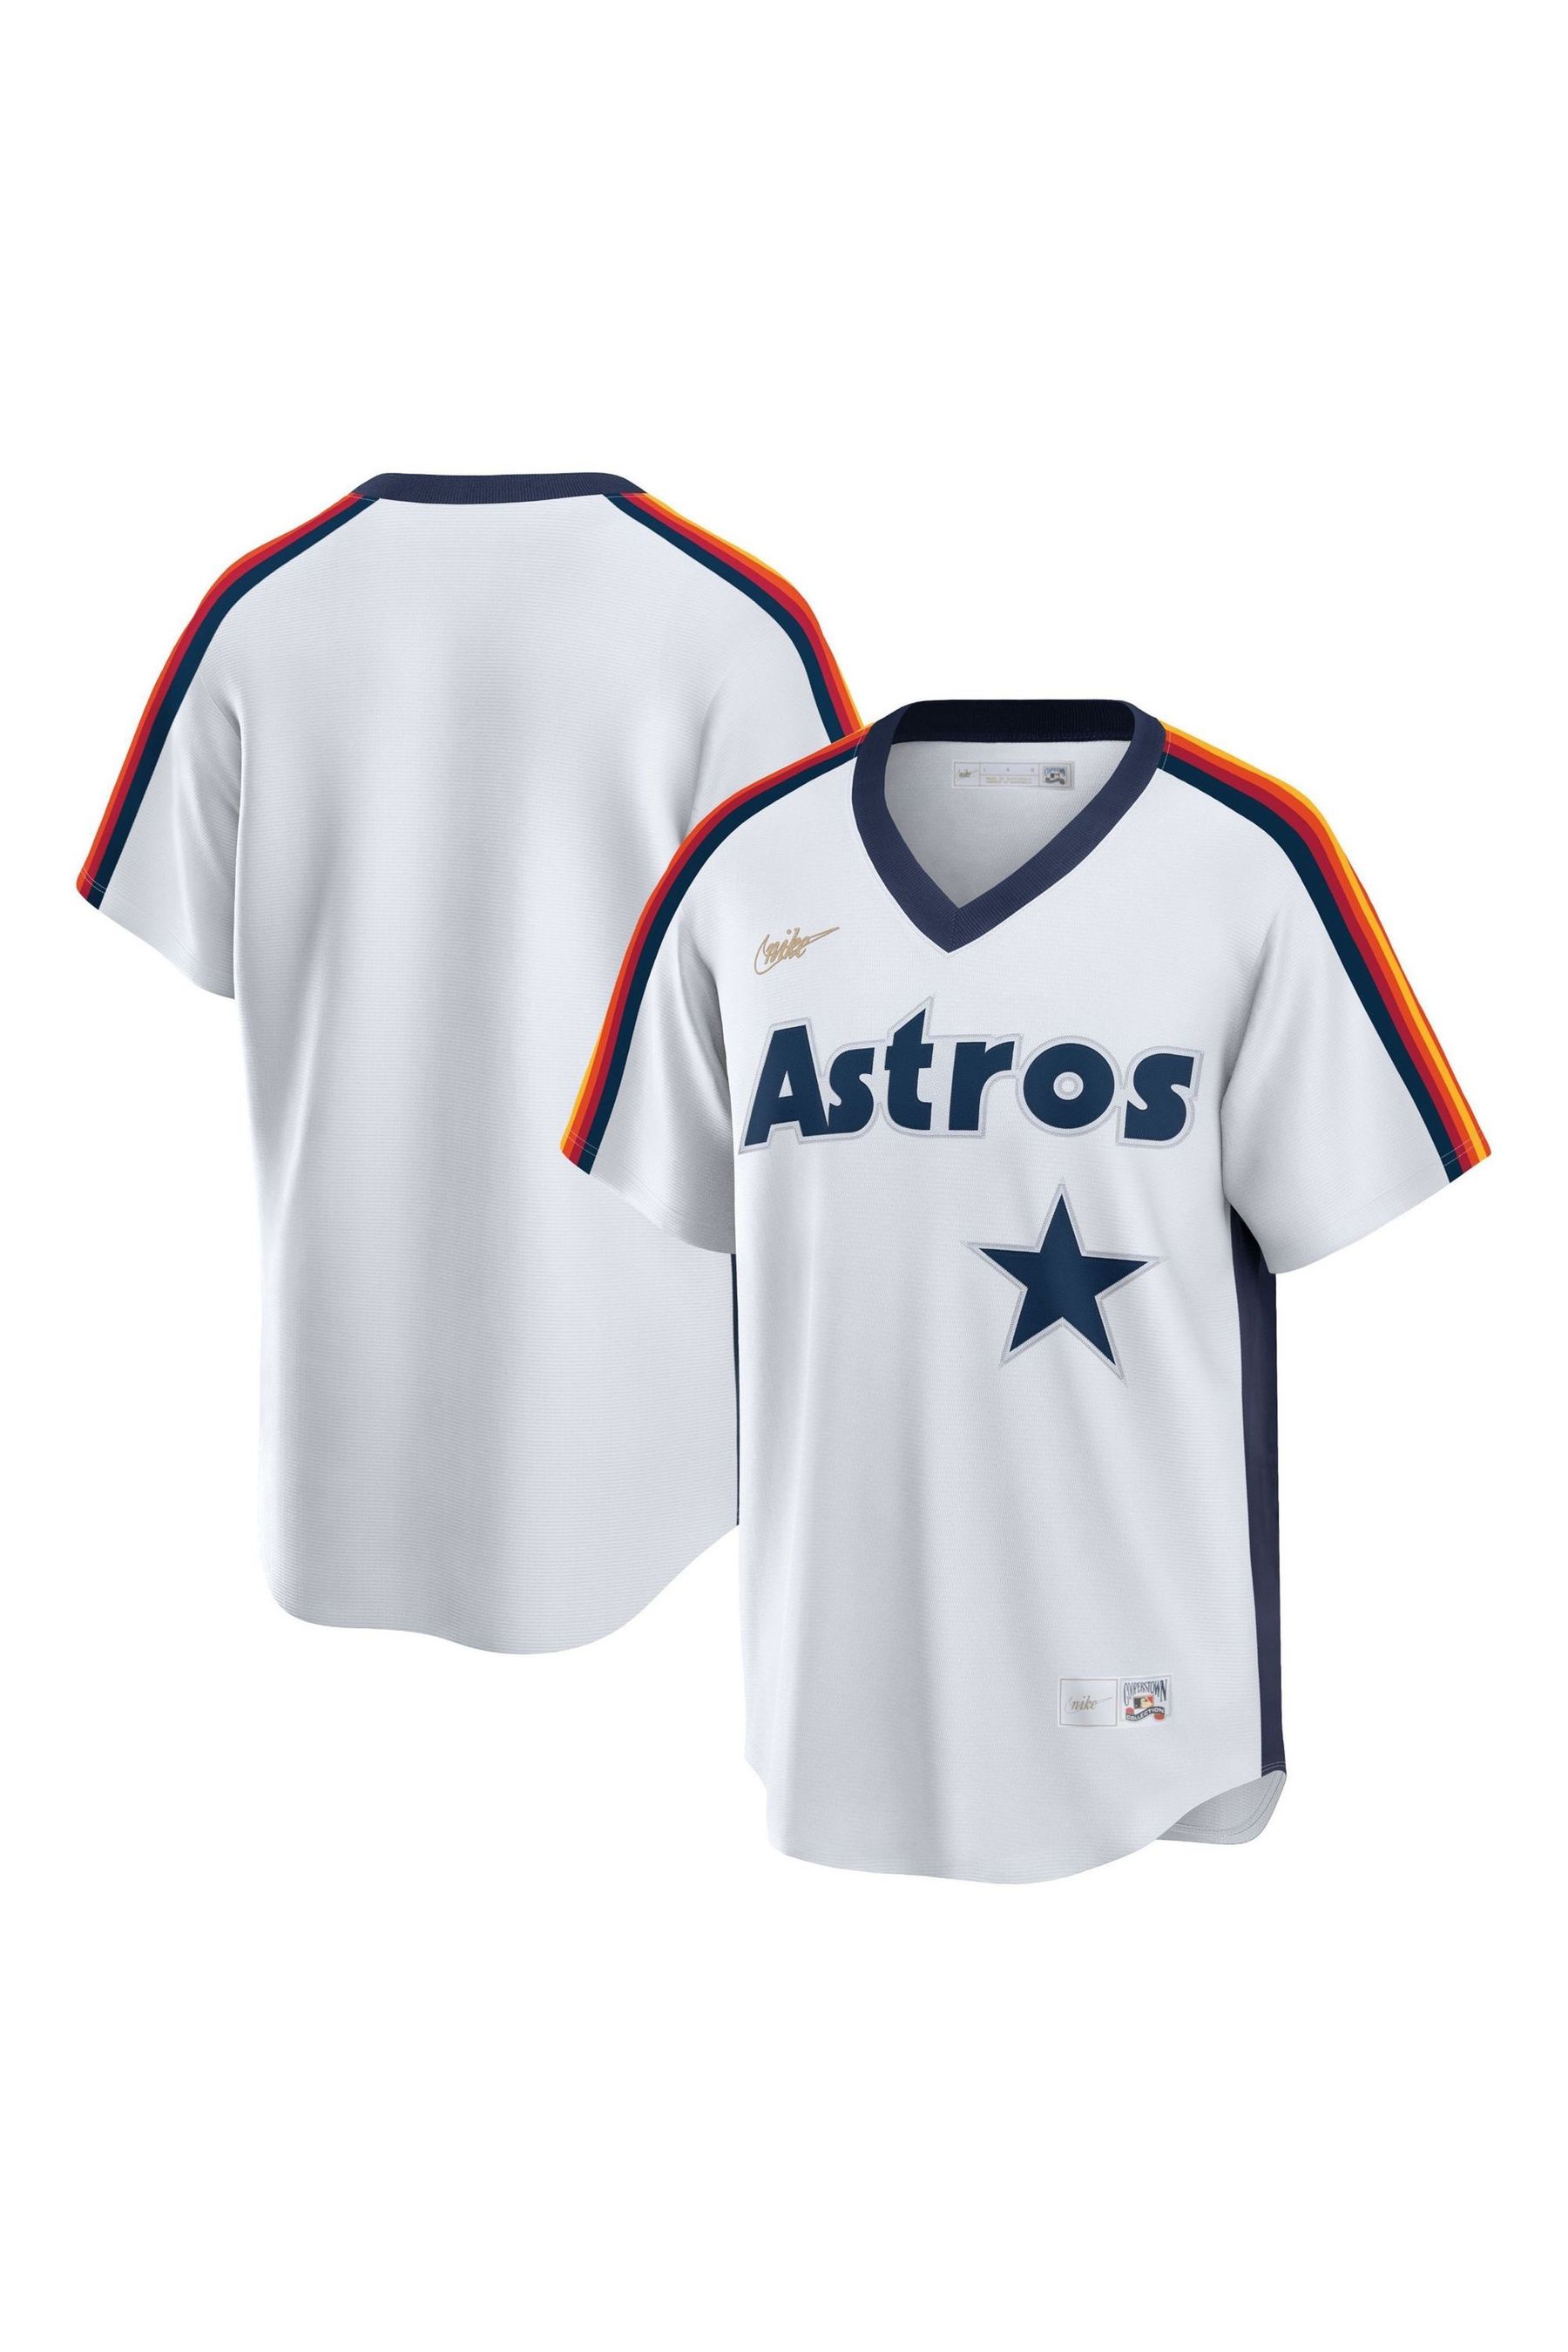 Футболка Хьюстон Астрос. Houston Astros футболка.